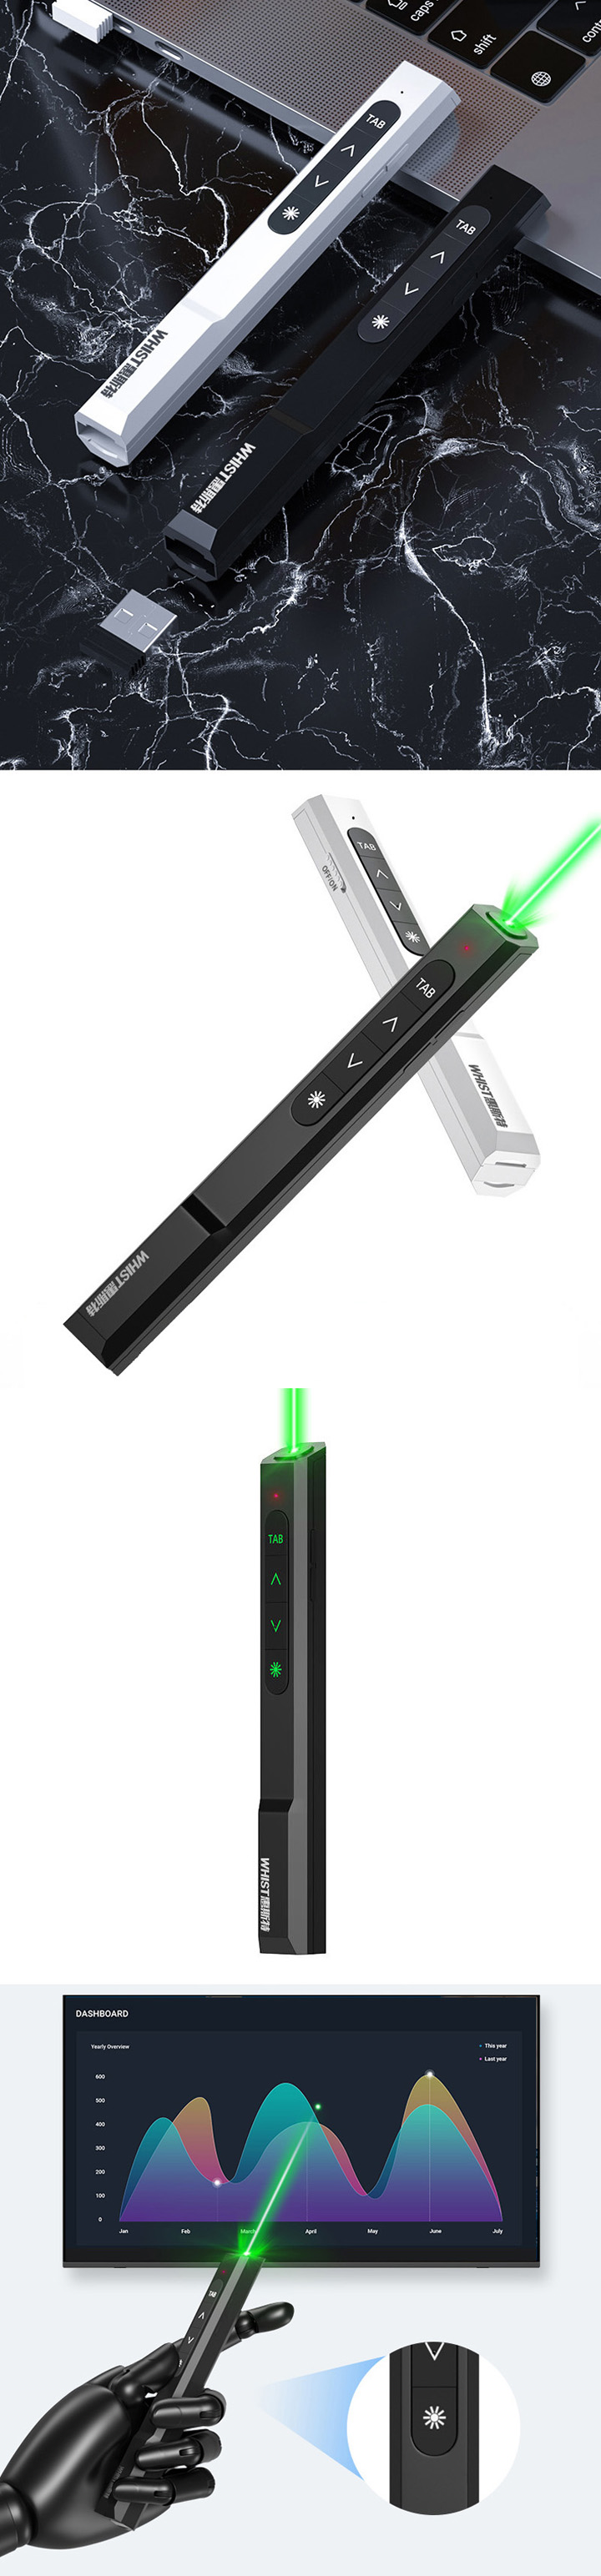 Presentatore con puntatore laser verde